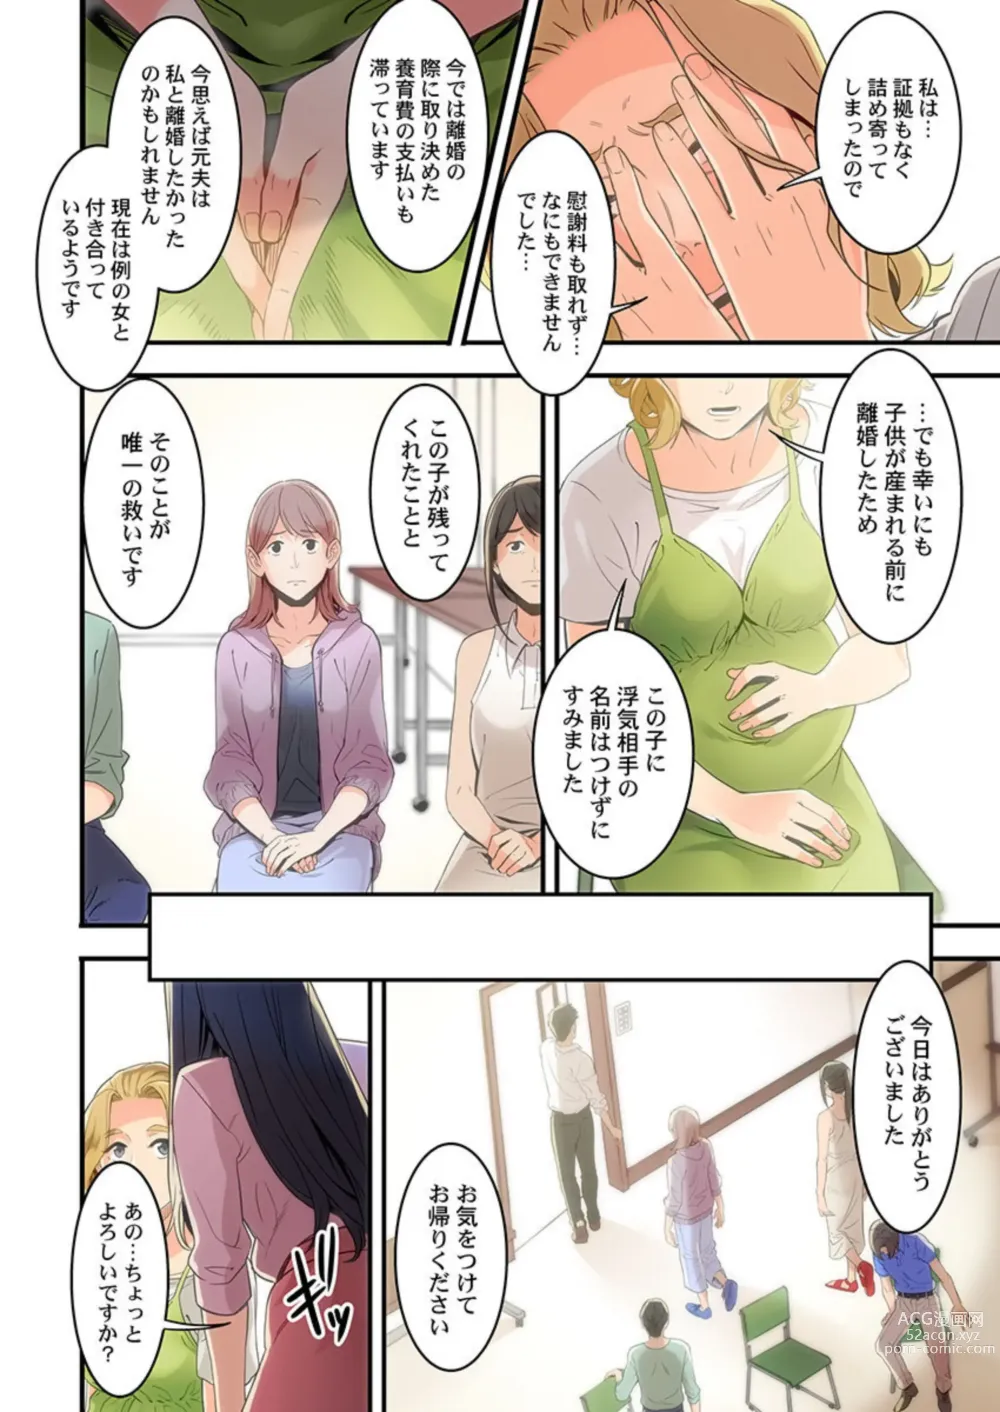 Page 16 of manga Furin Higaisha no kai